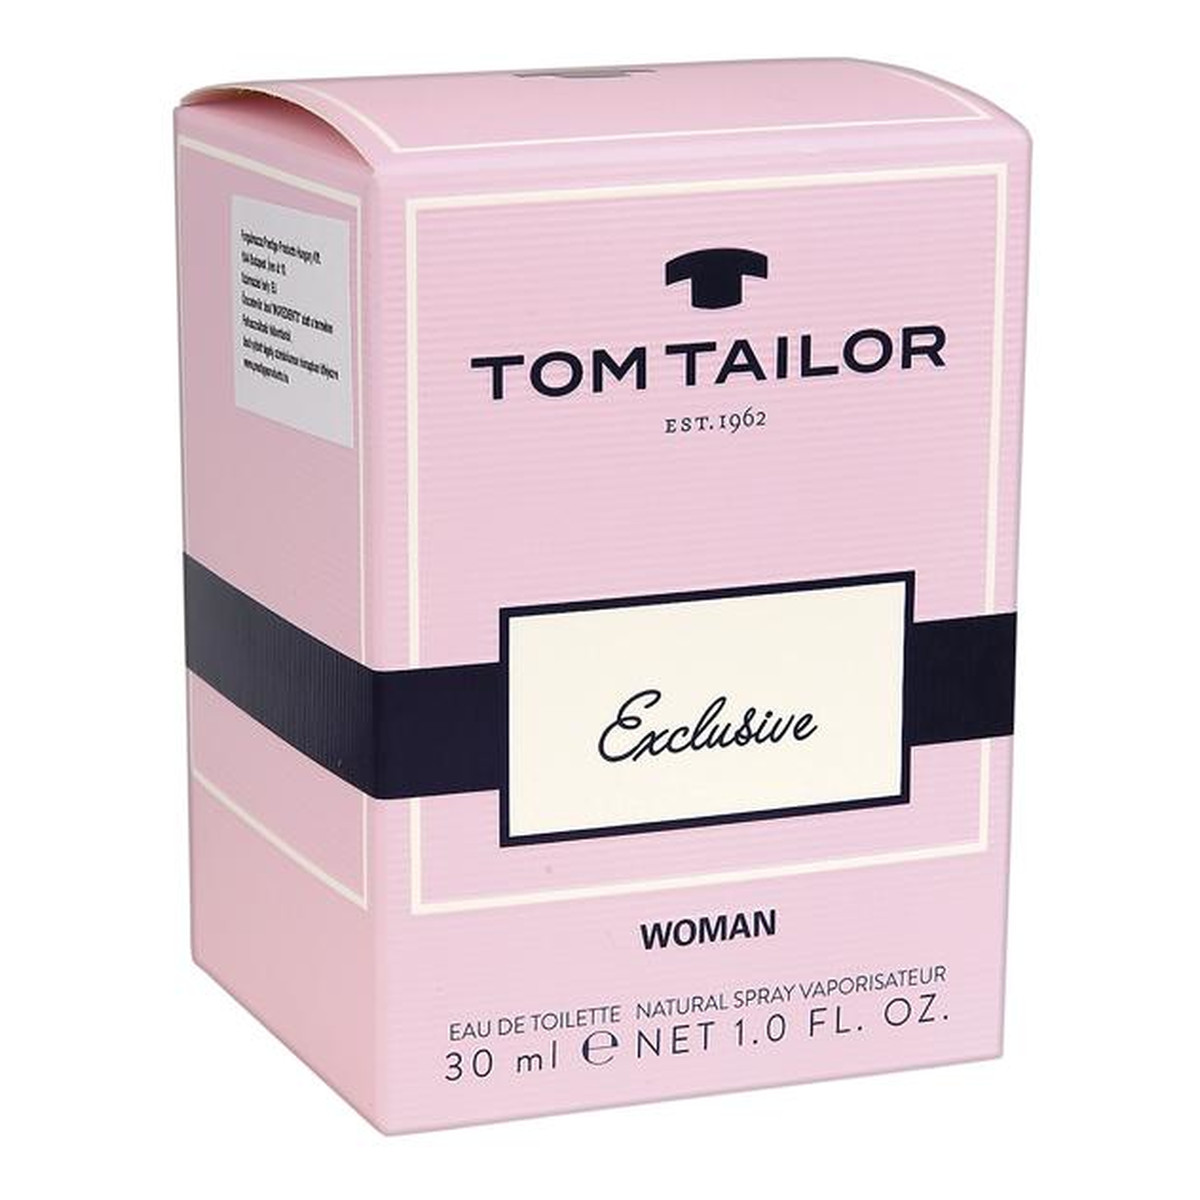 Tom Tailor Exclusive Woman Woda toaletowa 30ml